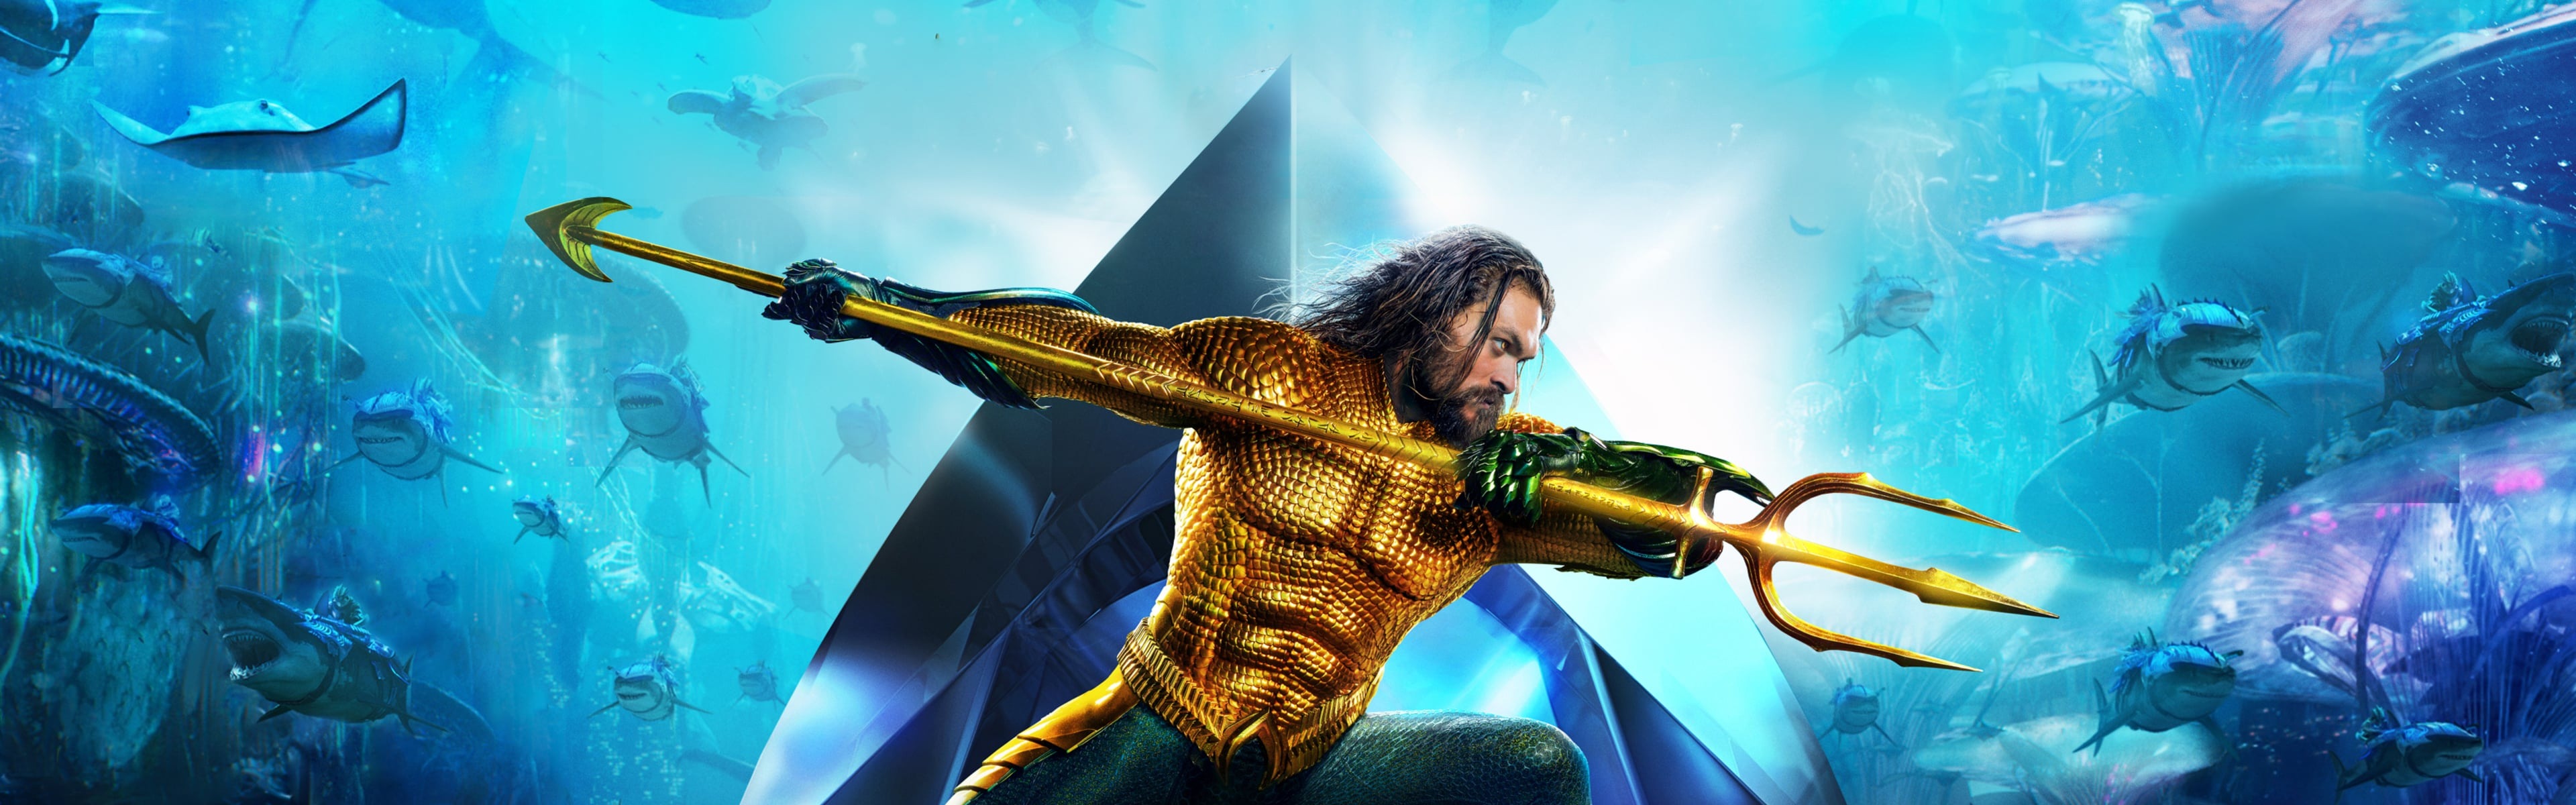 Aquaman, Marvel película fondos de pantalla de alta definición #15 - 3840x1200